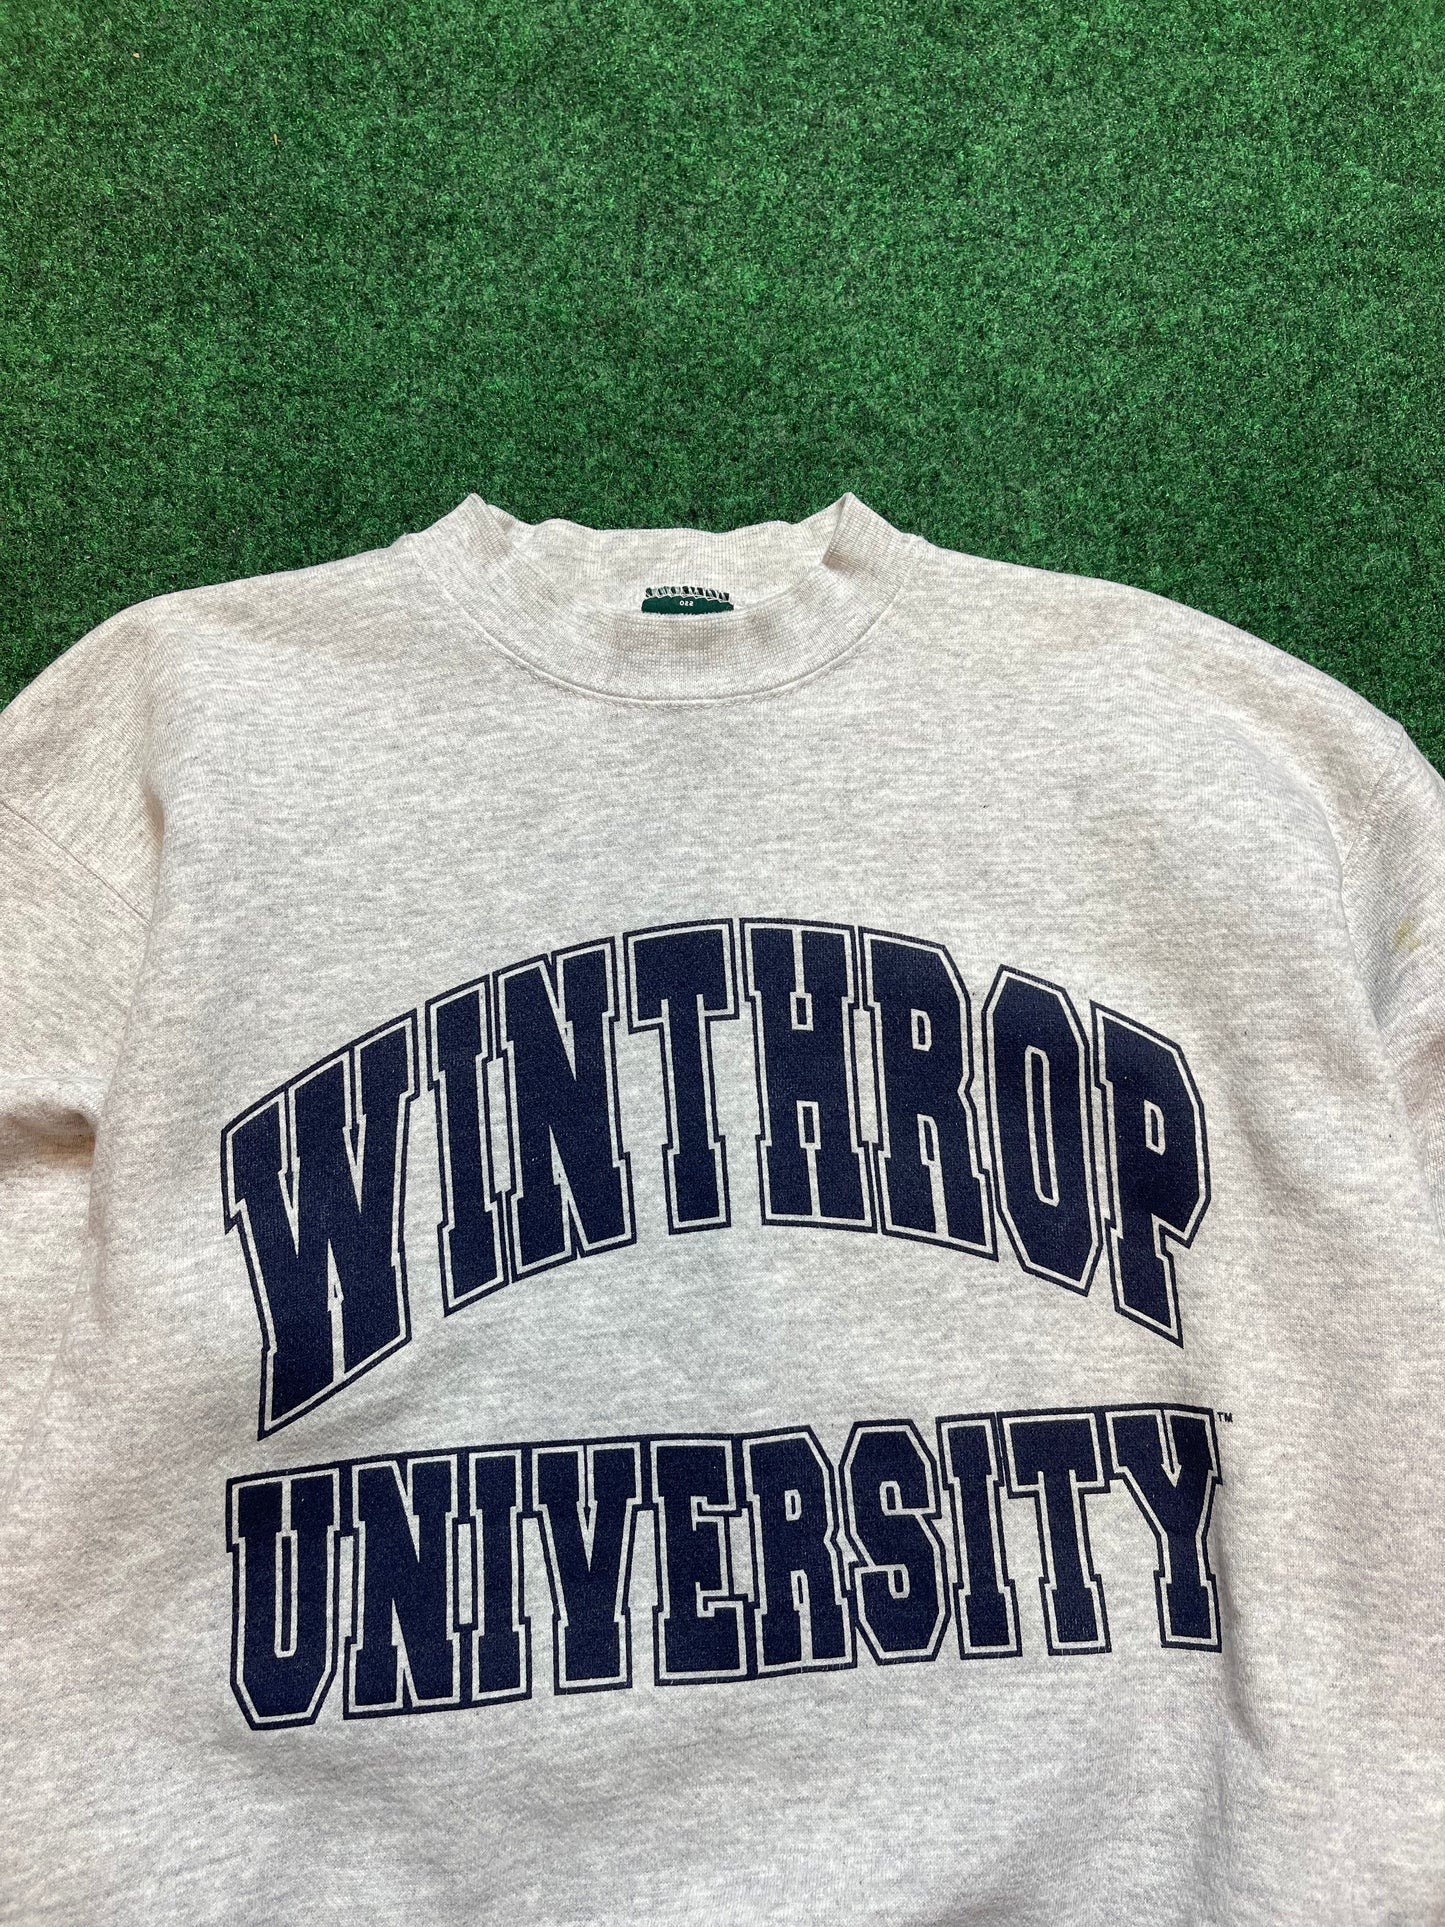 90’s Winthrop University Eagles Vintage College Crewneck (Large)